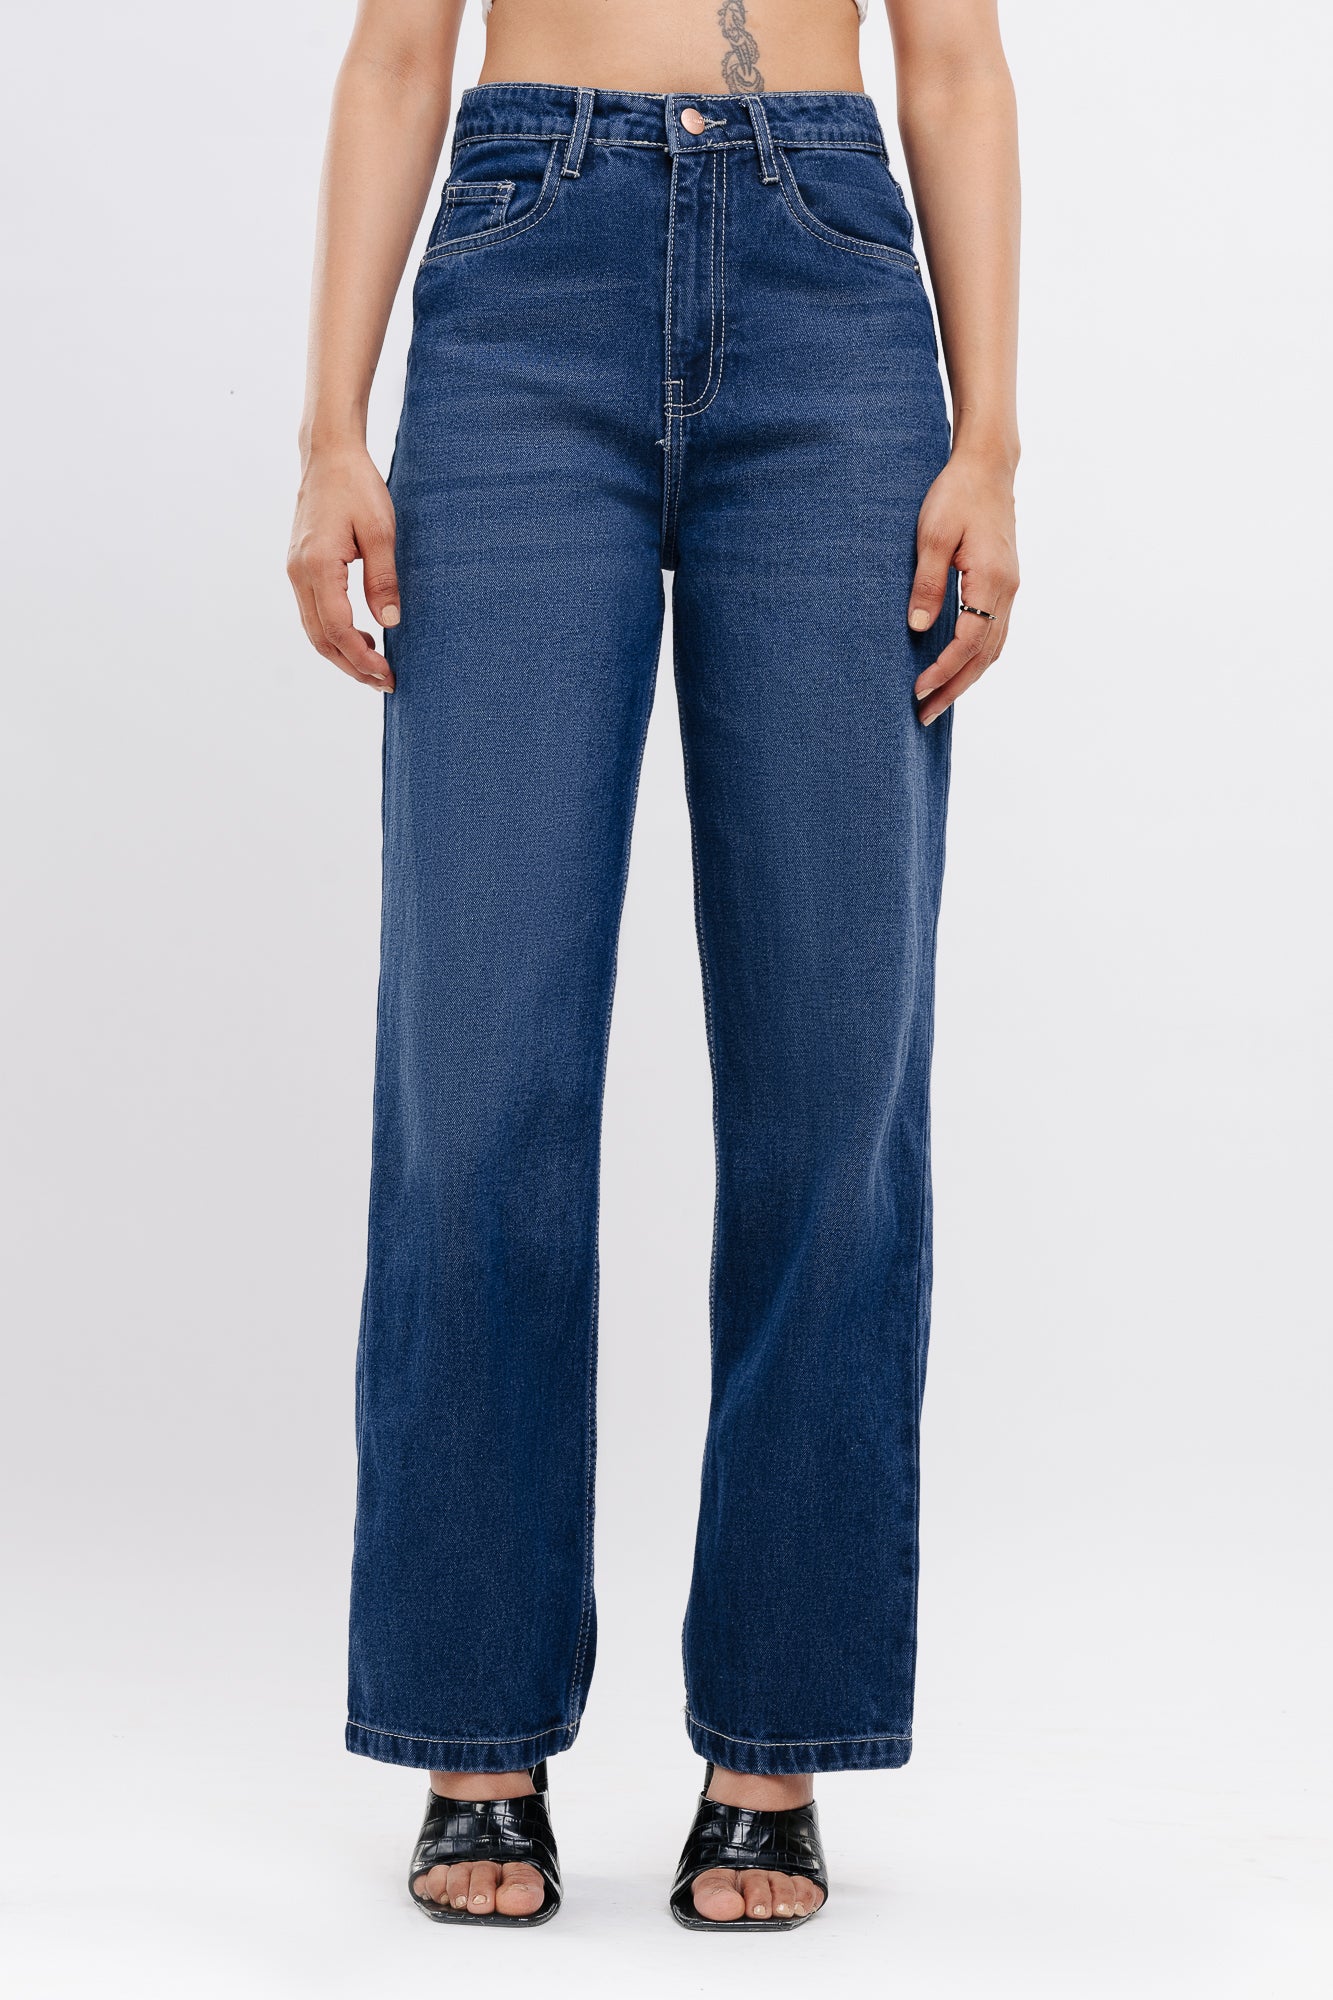 Jeans for Apple Shape